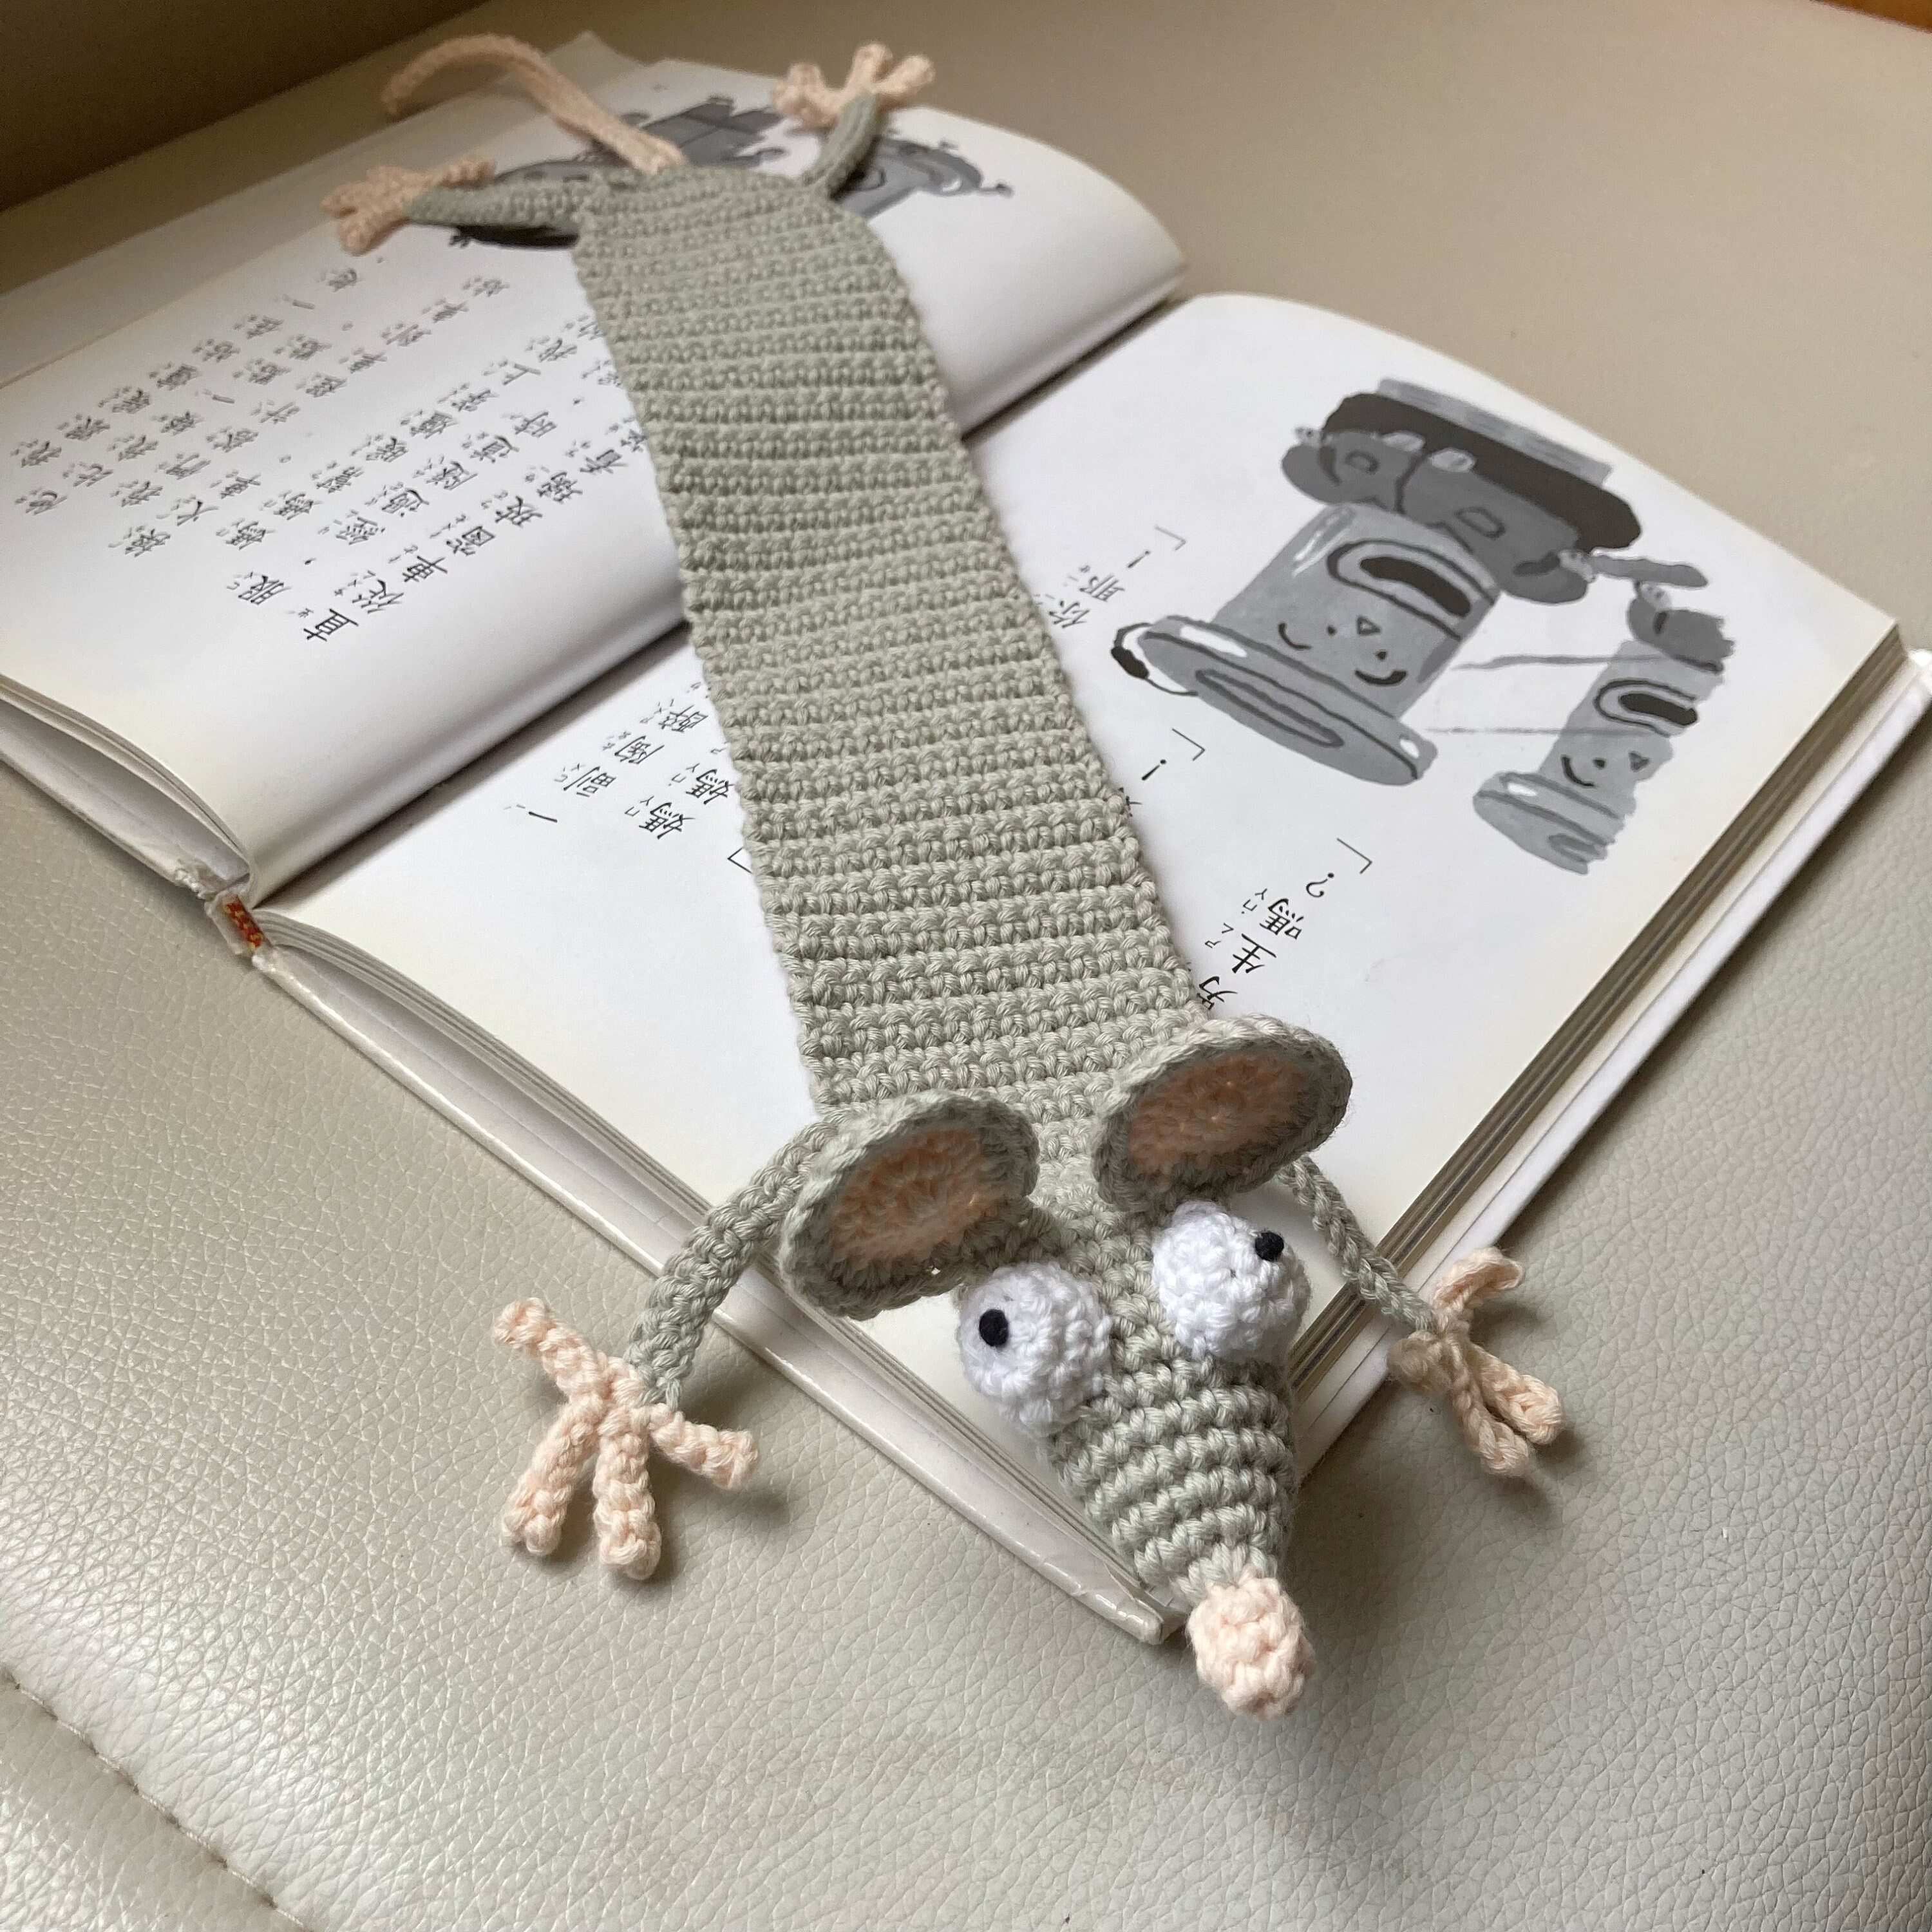 Amigurumi Crochet Rat Bookmark - Book-Rat